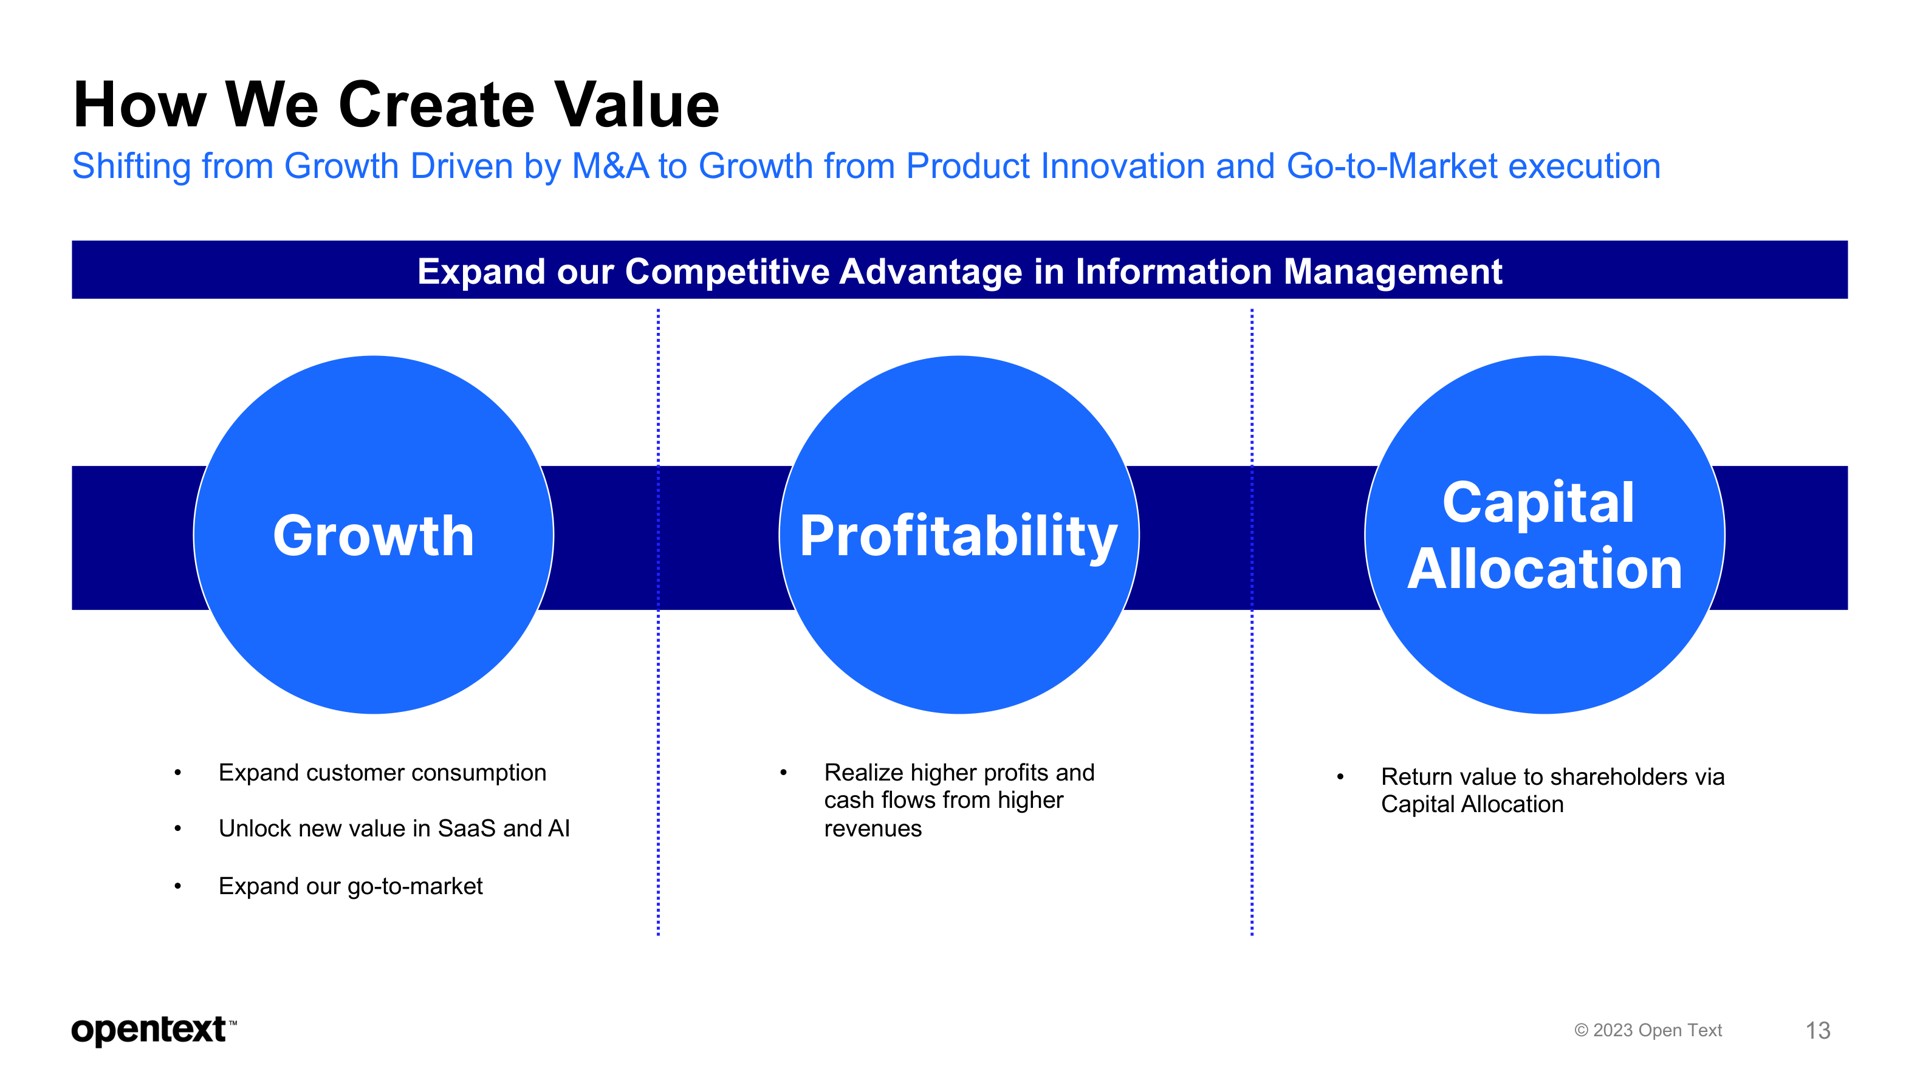 how we create value growth profitability capital allocation | OpenText